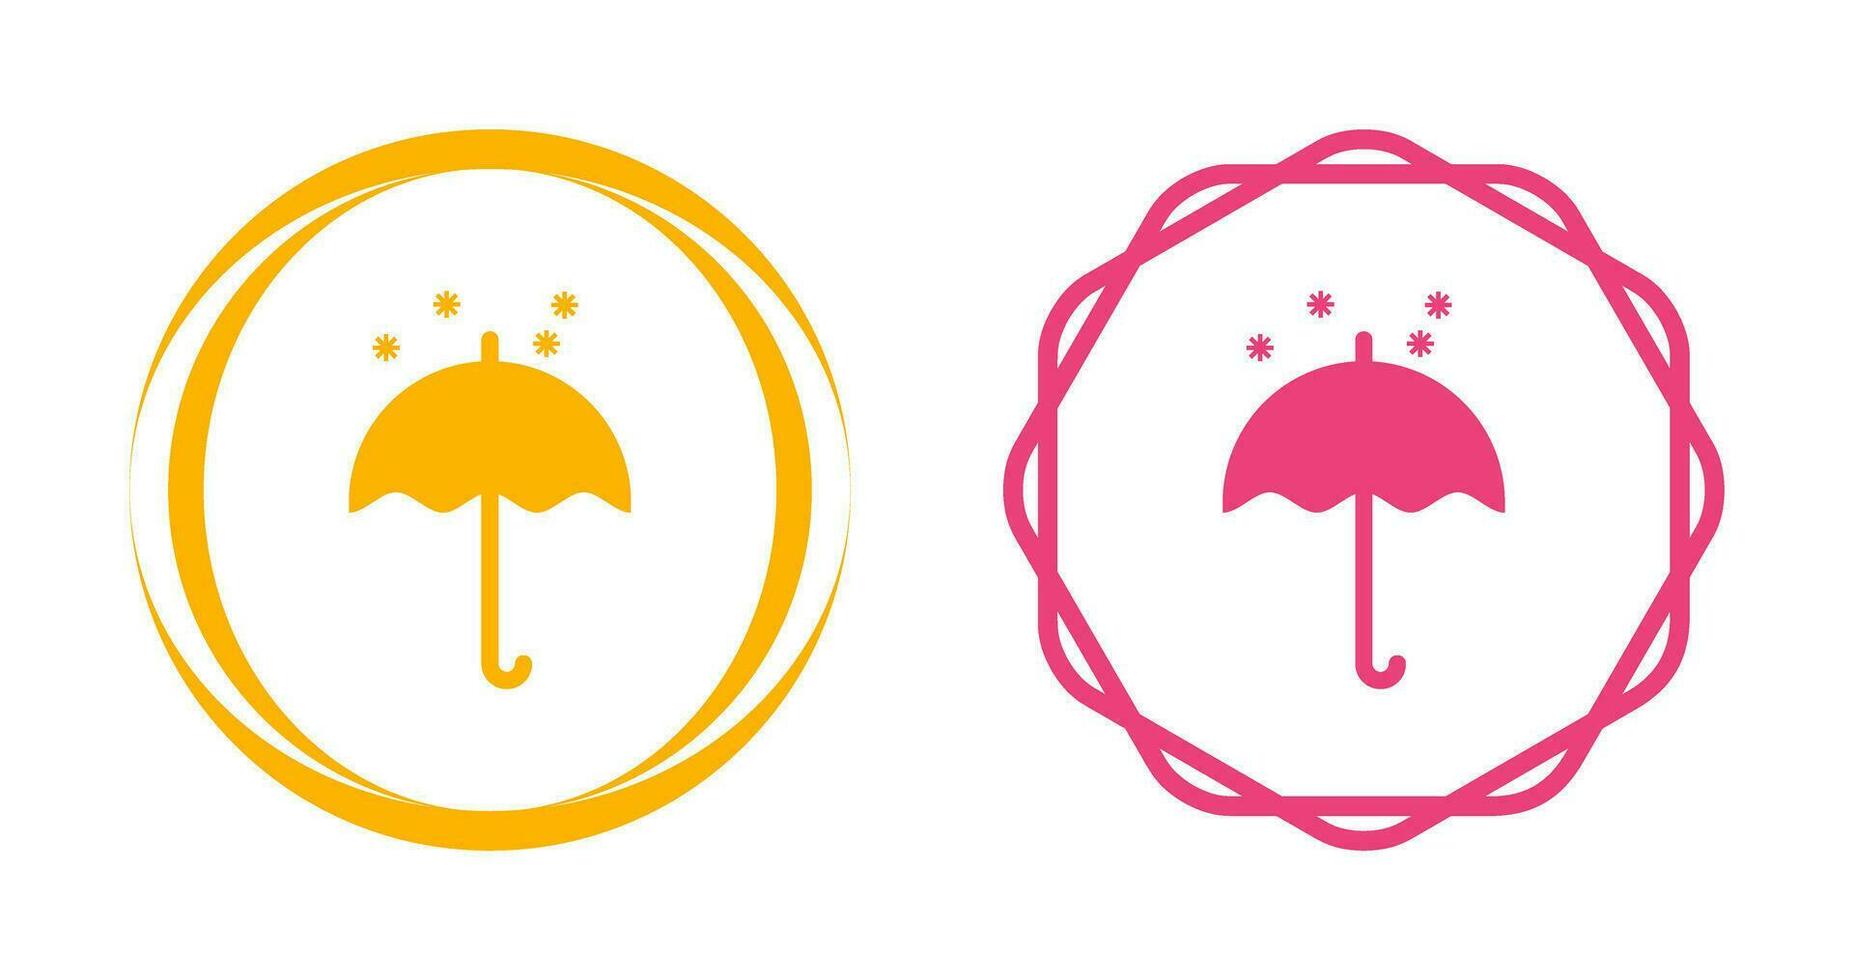 Regenschirm mit Schneevektorsymbol vektor